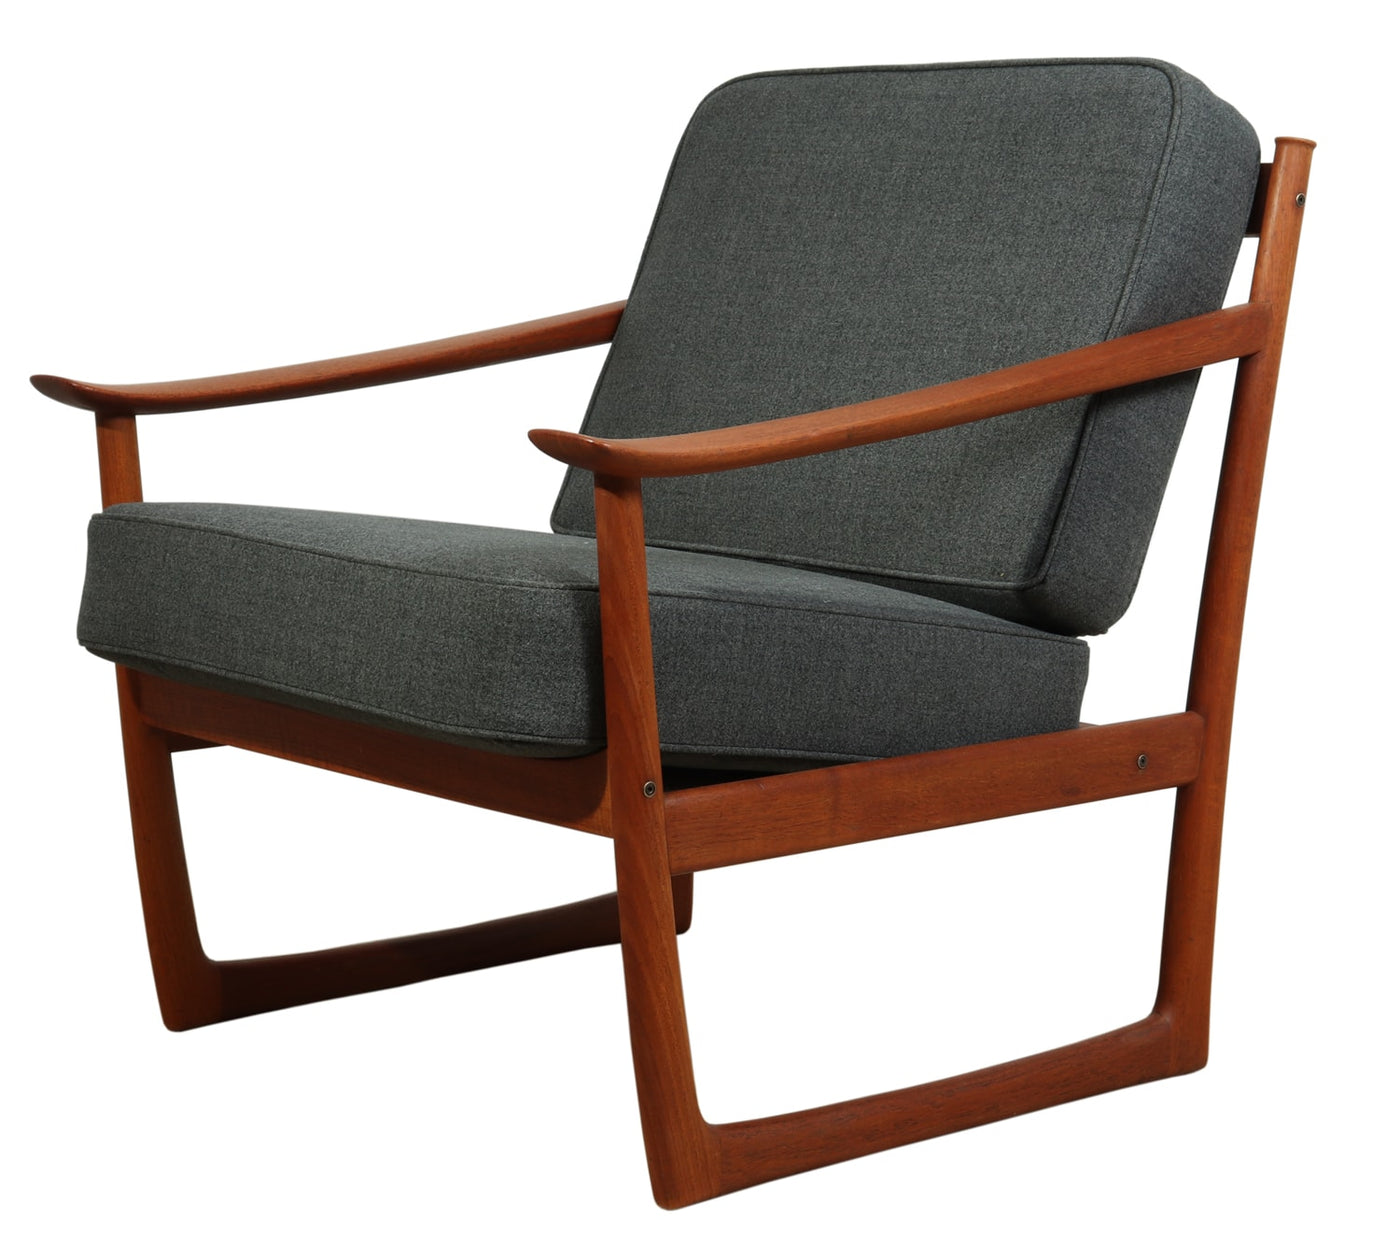 Teak Chair Model 130 by Peter Hvidt for